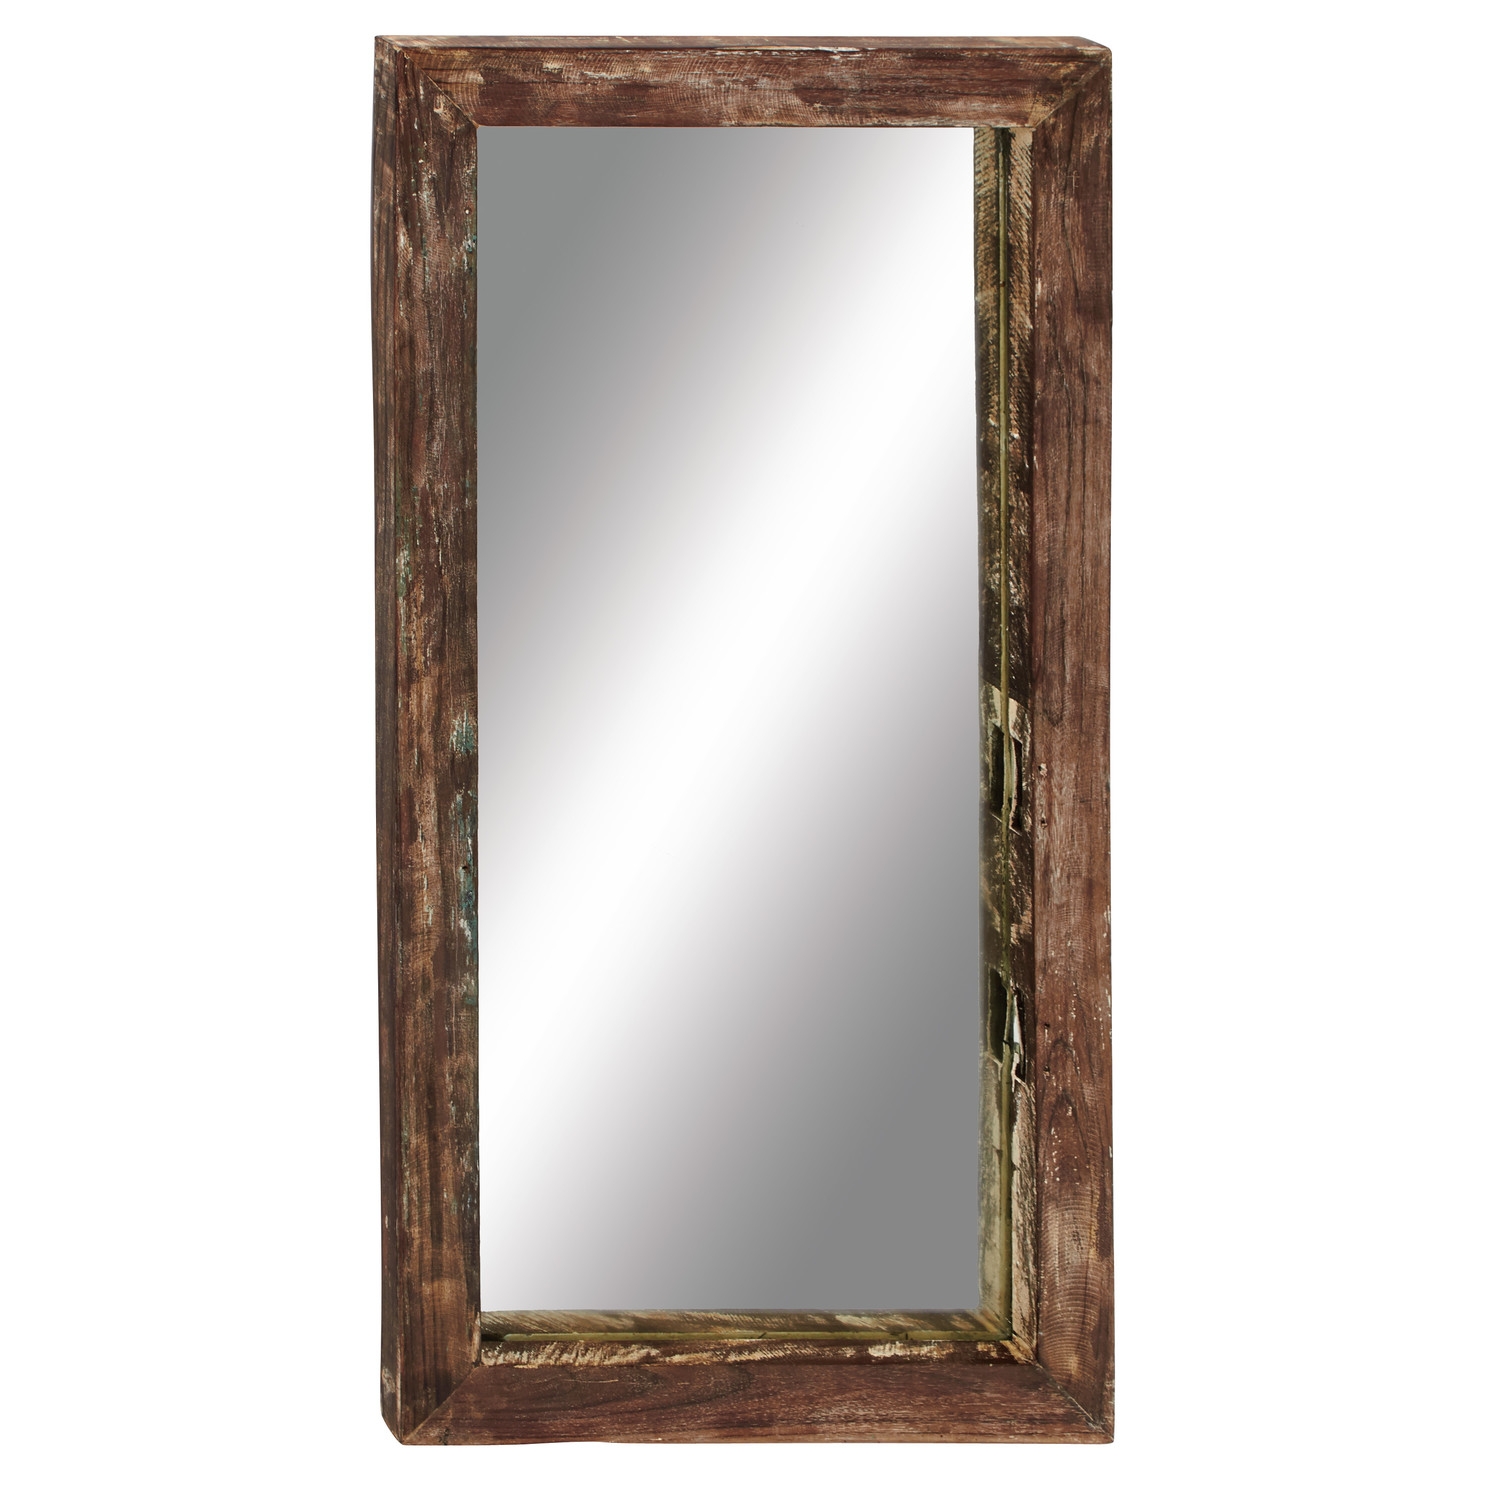 Antique Like Wood Teak Wall Mirror - Image 0